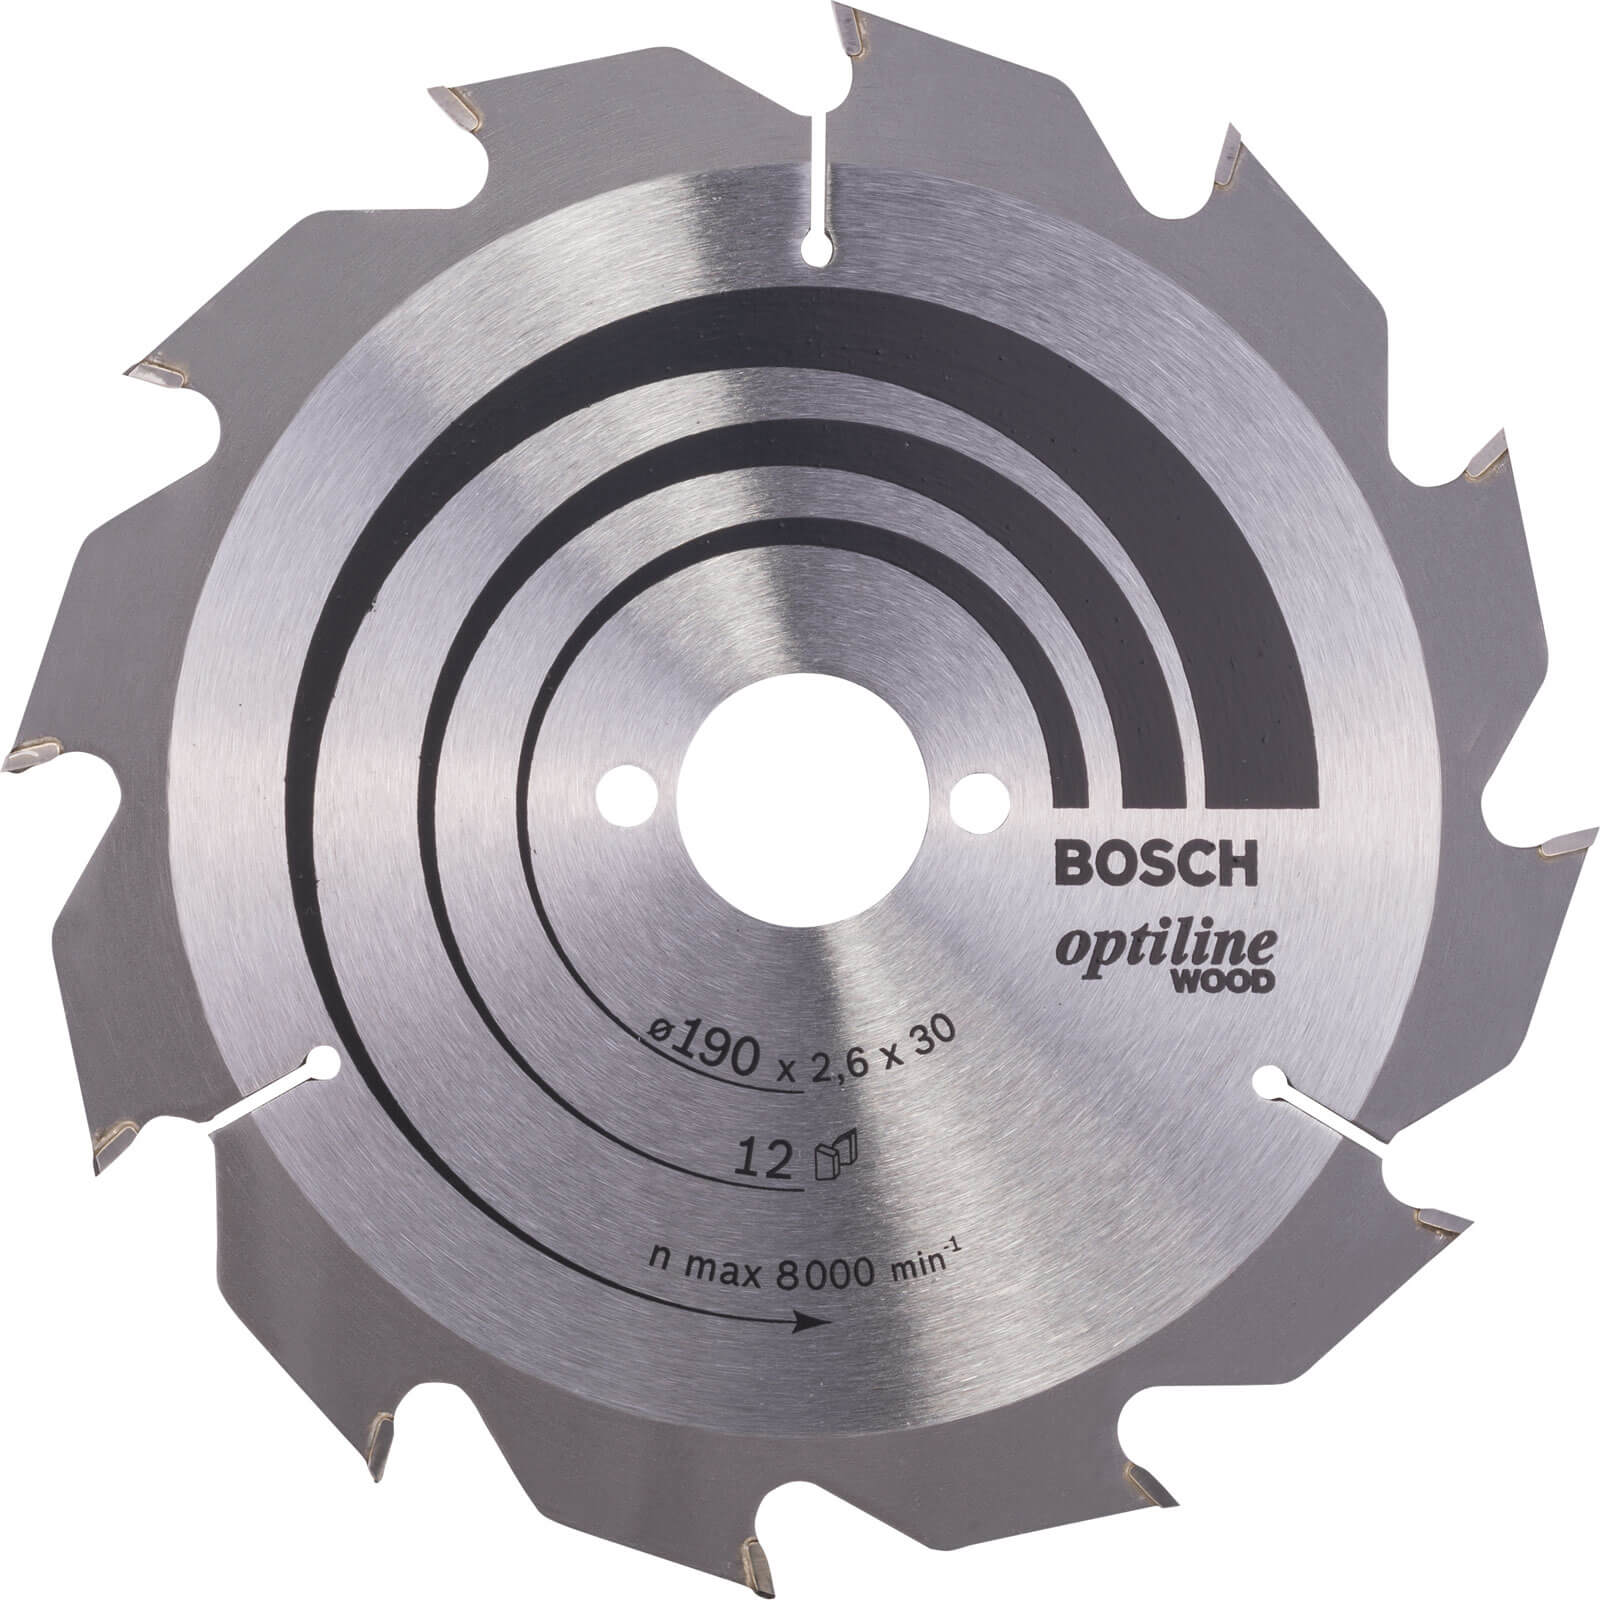 Photo of Bosch Optiline Wood Cutting Saw Blade 190mm 12t 30mm